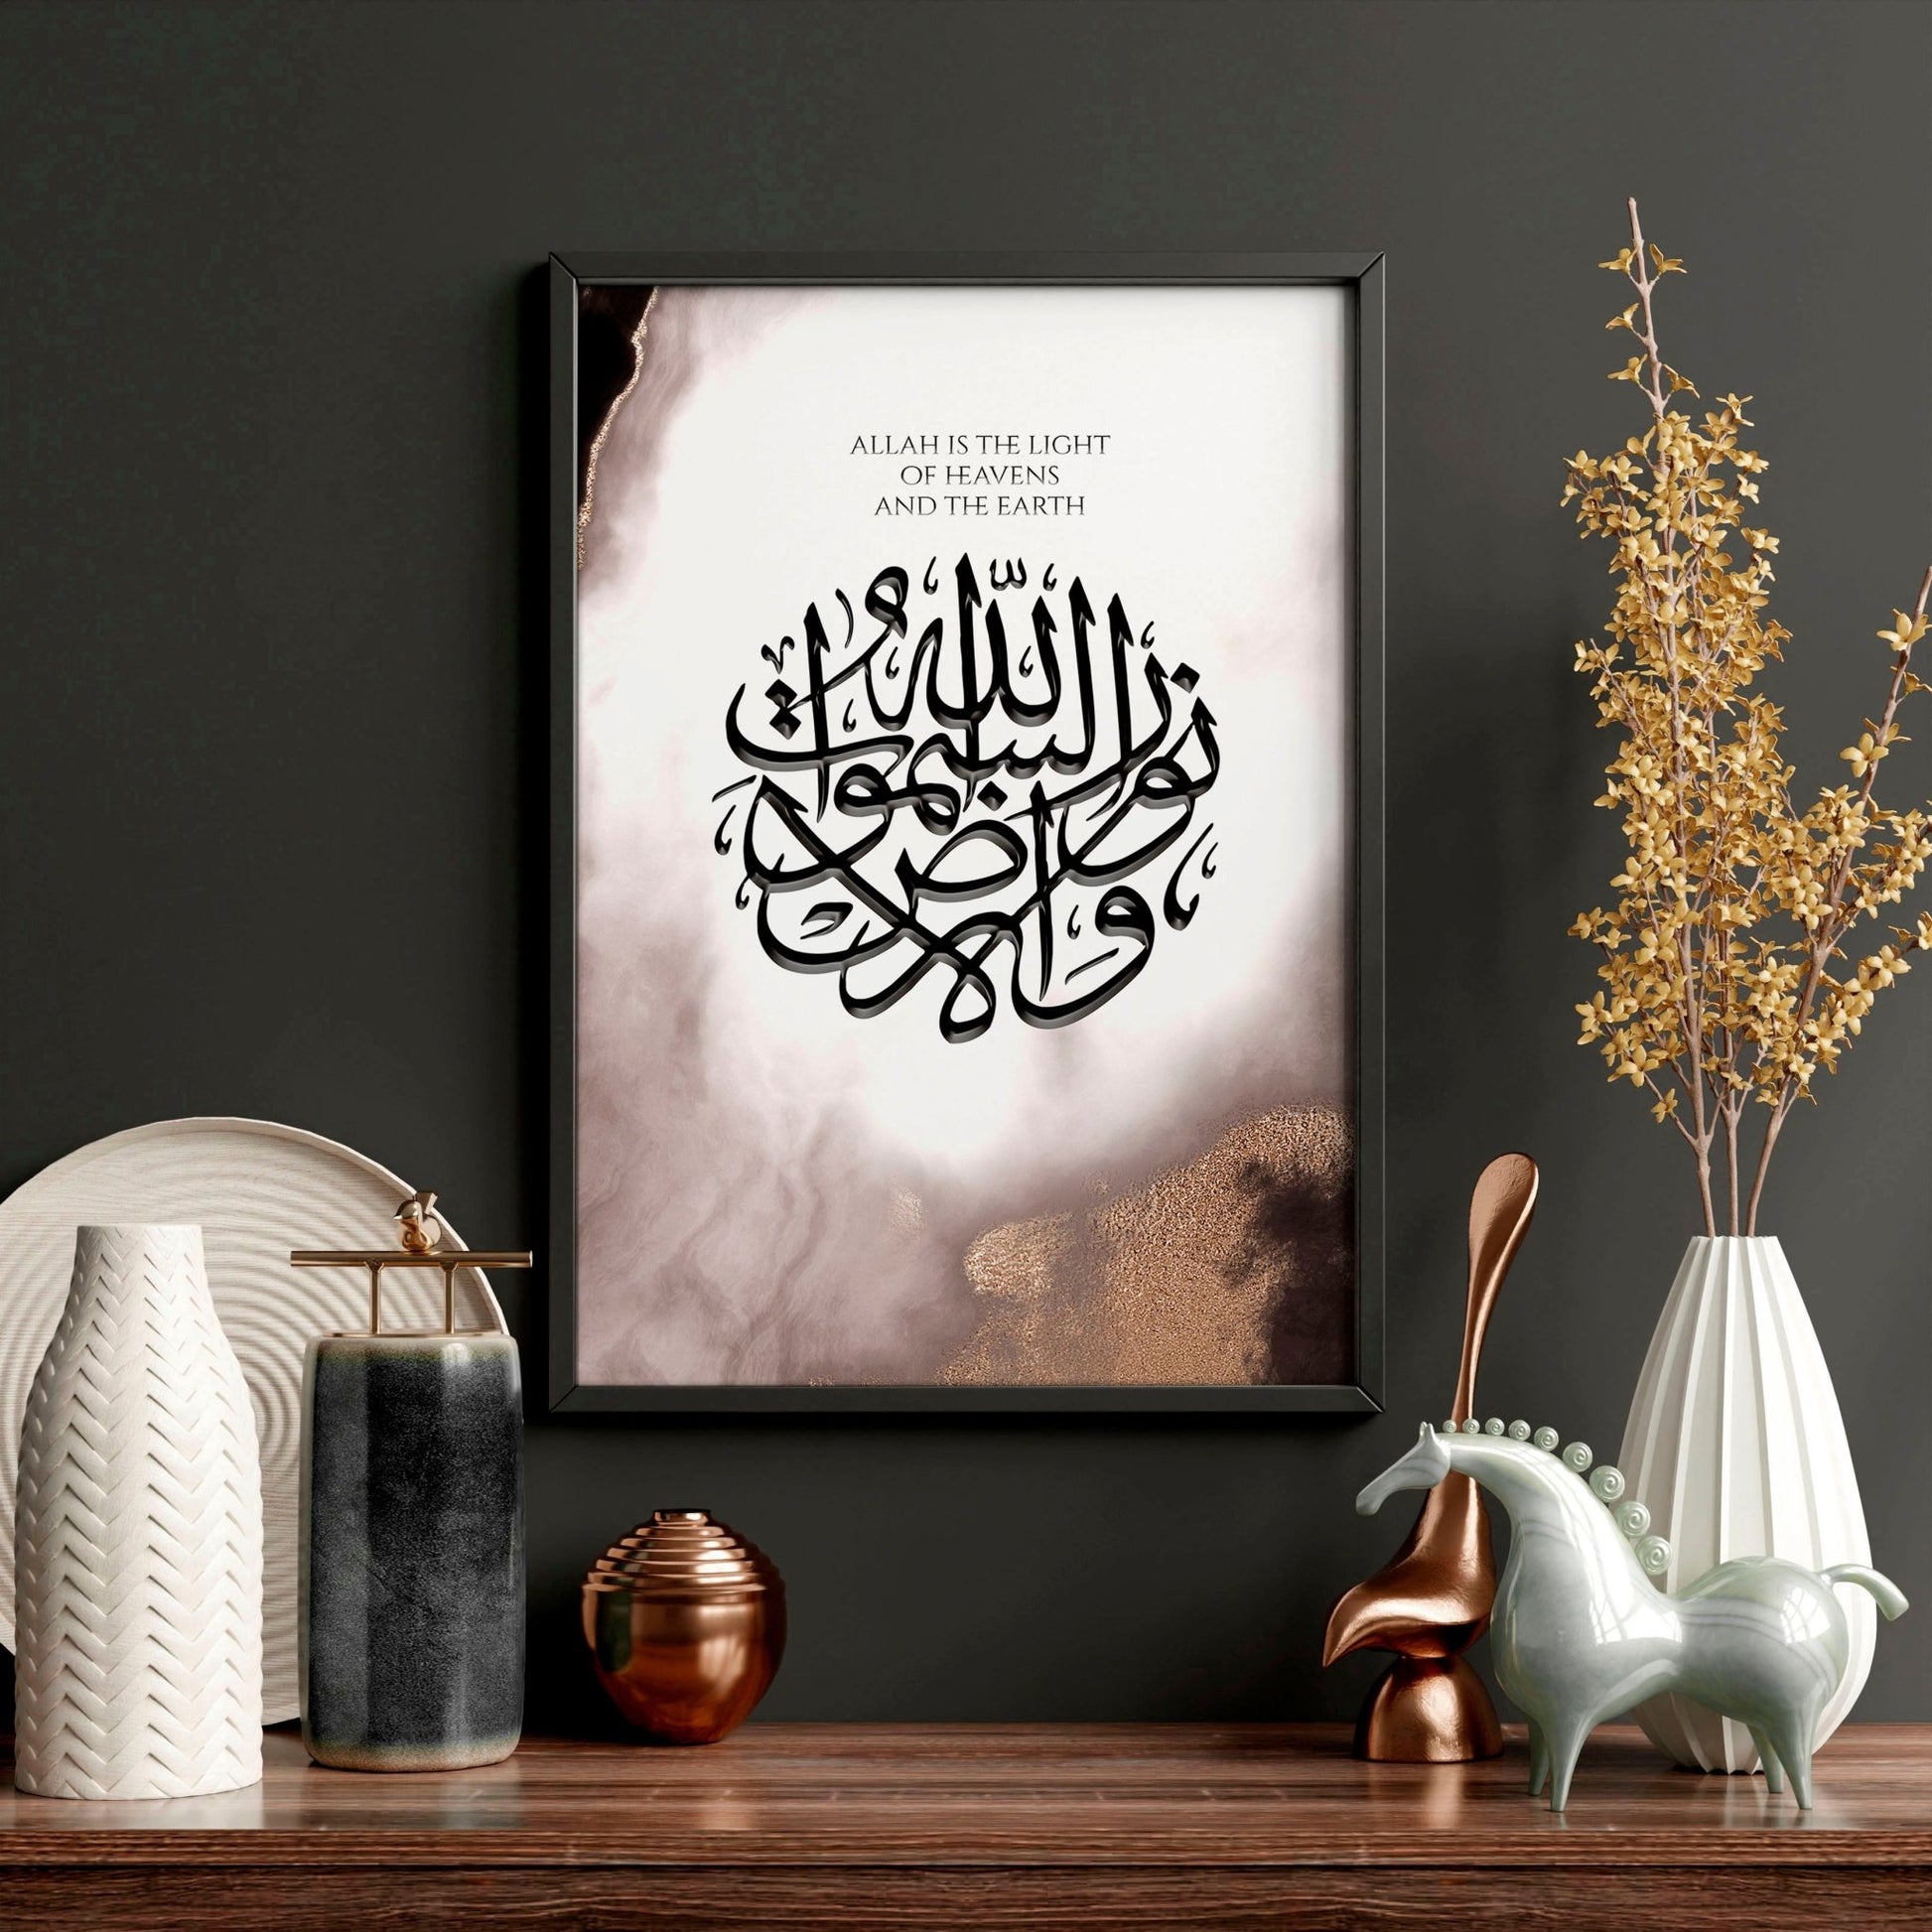 Allah u Akbar in Arabic prints for bedroom | set of 3 wall art prints